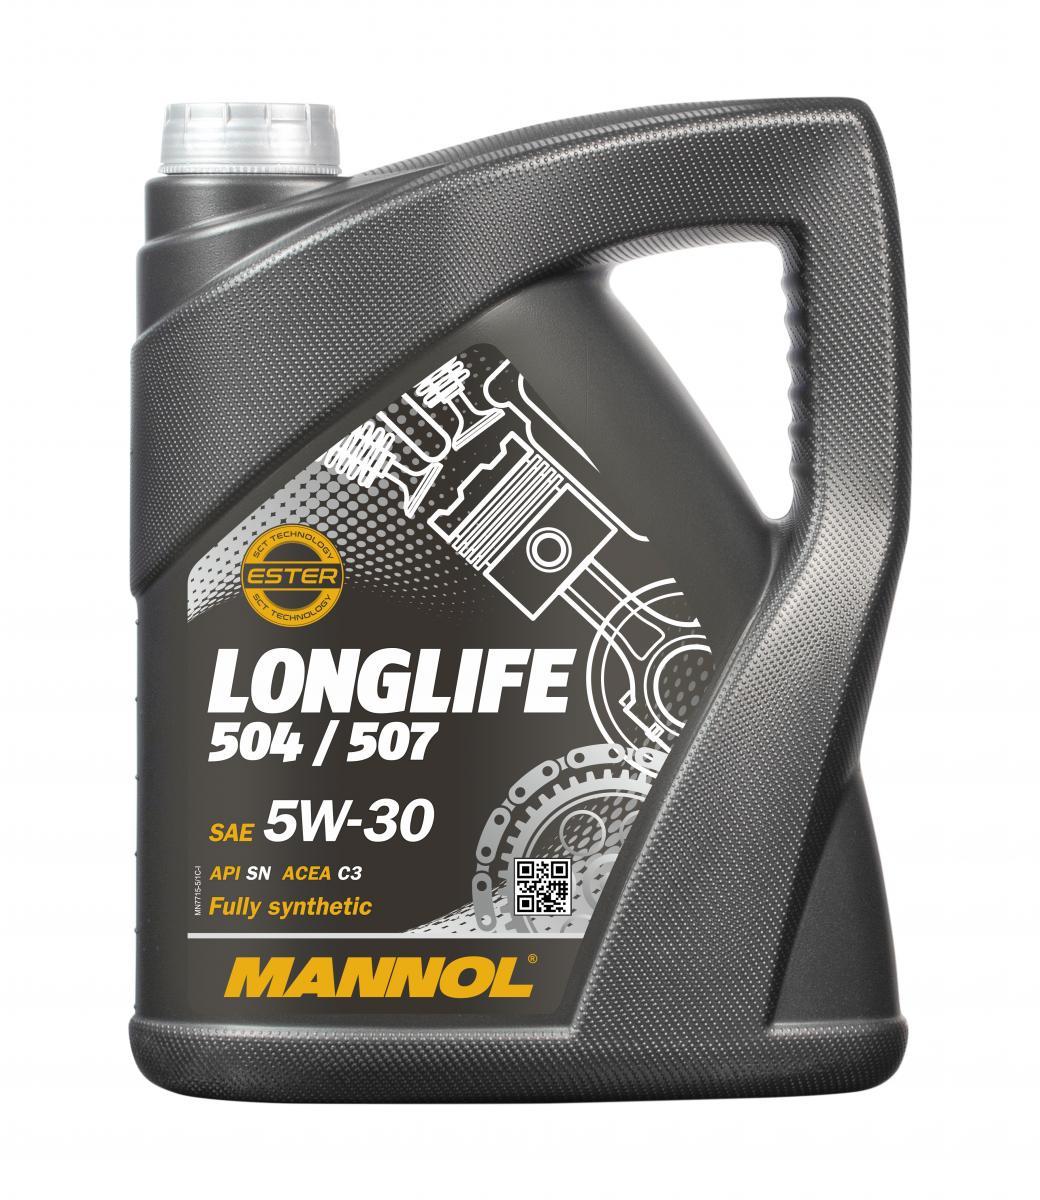 Mannol Longlife 504 / 507 5W-30, 5L Motoröl